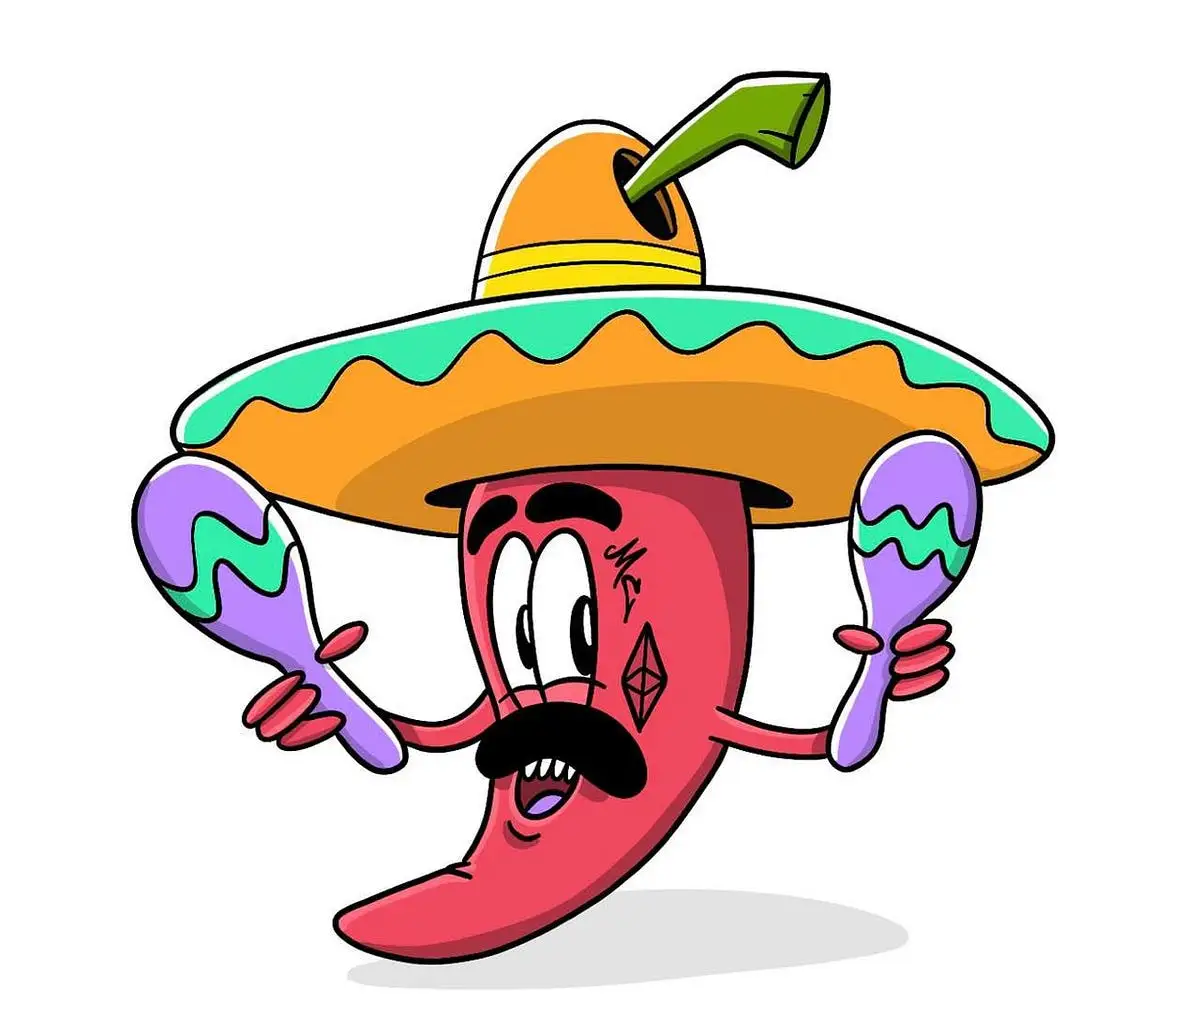 Metacartel’s cartoon chili pepper wearing a sombrero and holding maracas.